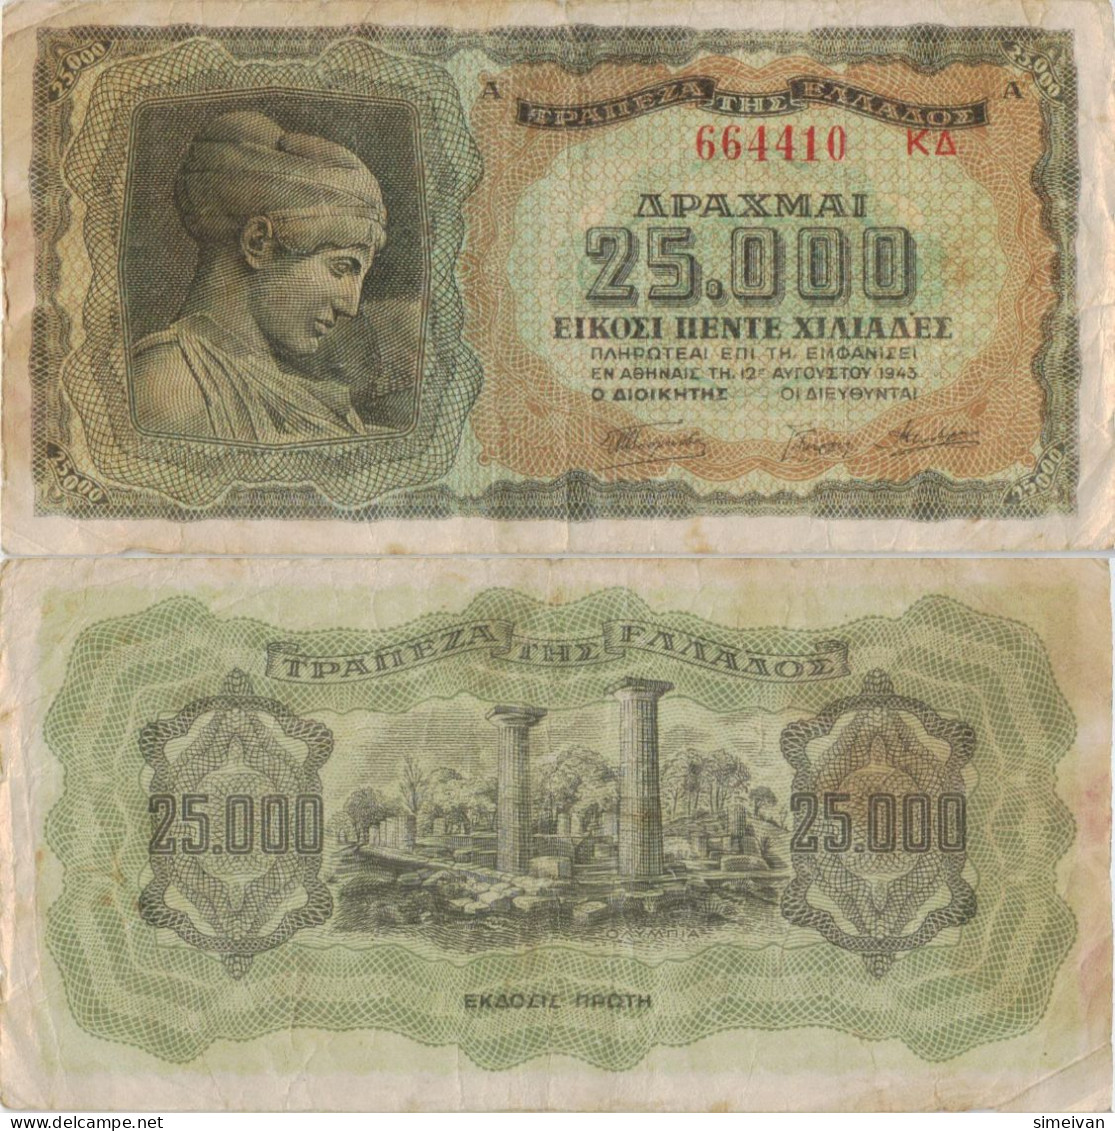 Greece 25000 Drachmai 1943 P-123a Banknote Europe Currency Grèce Griechenland #5101 - Grèce